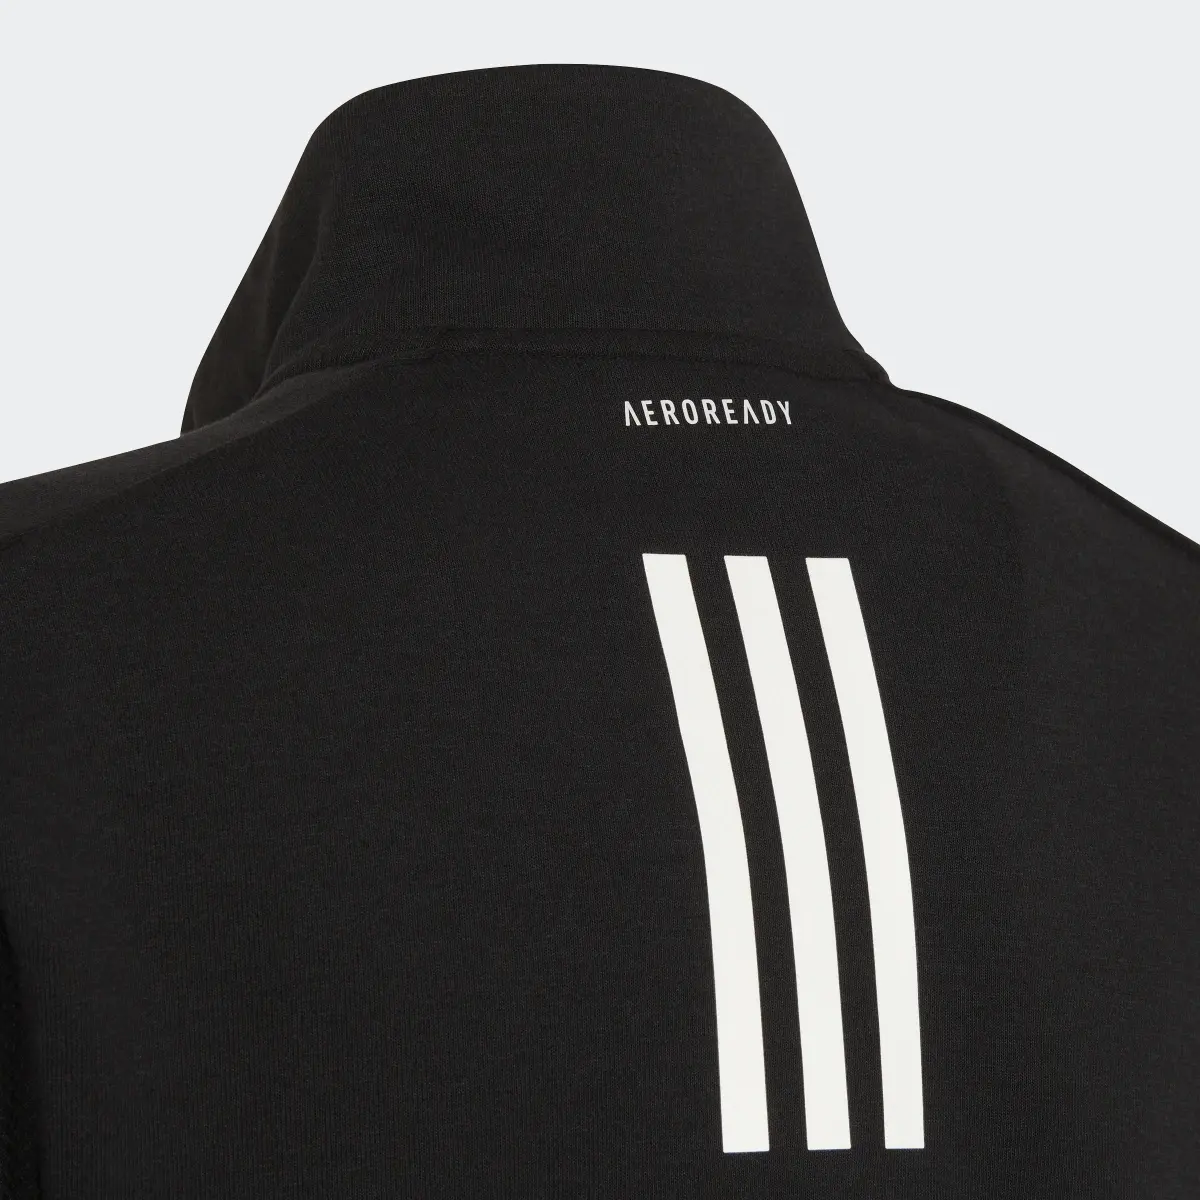 Adidas XFG Techy Inspired Sweatshirt. 3